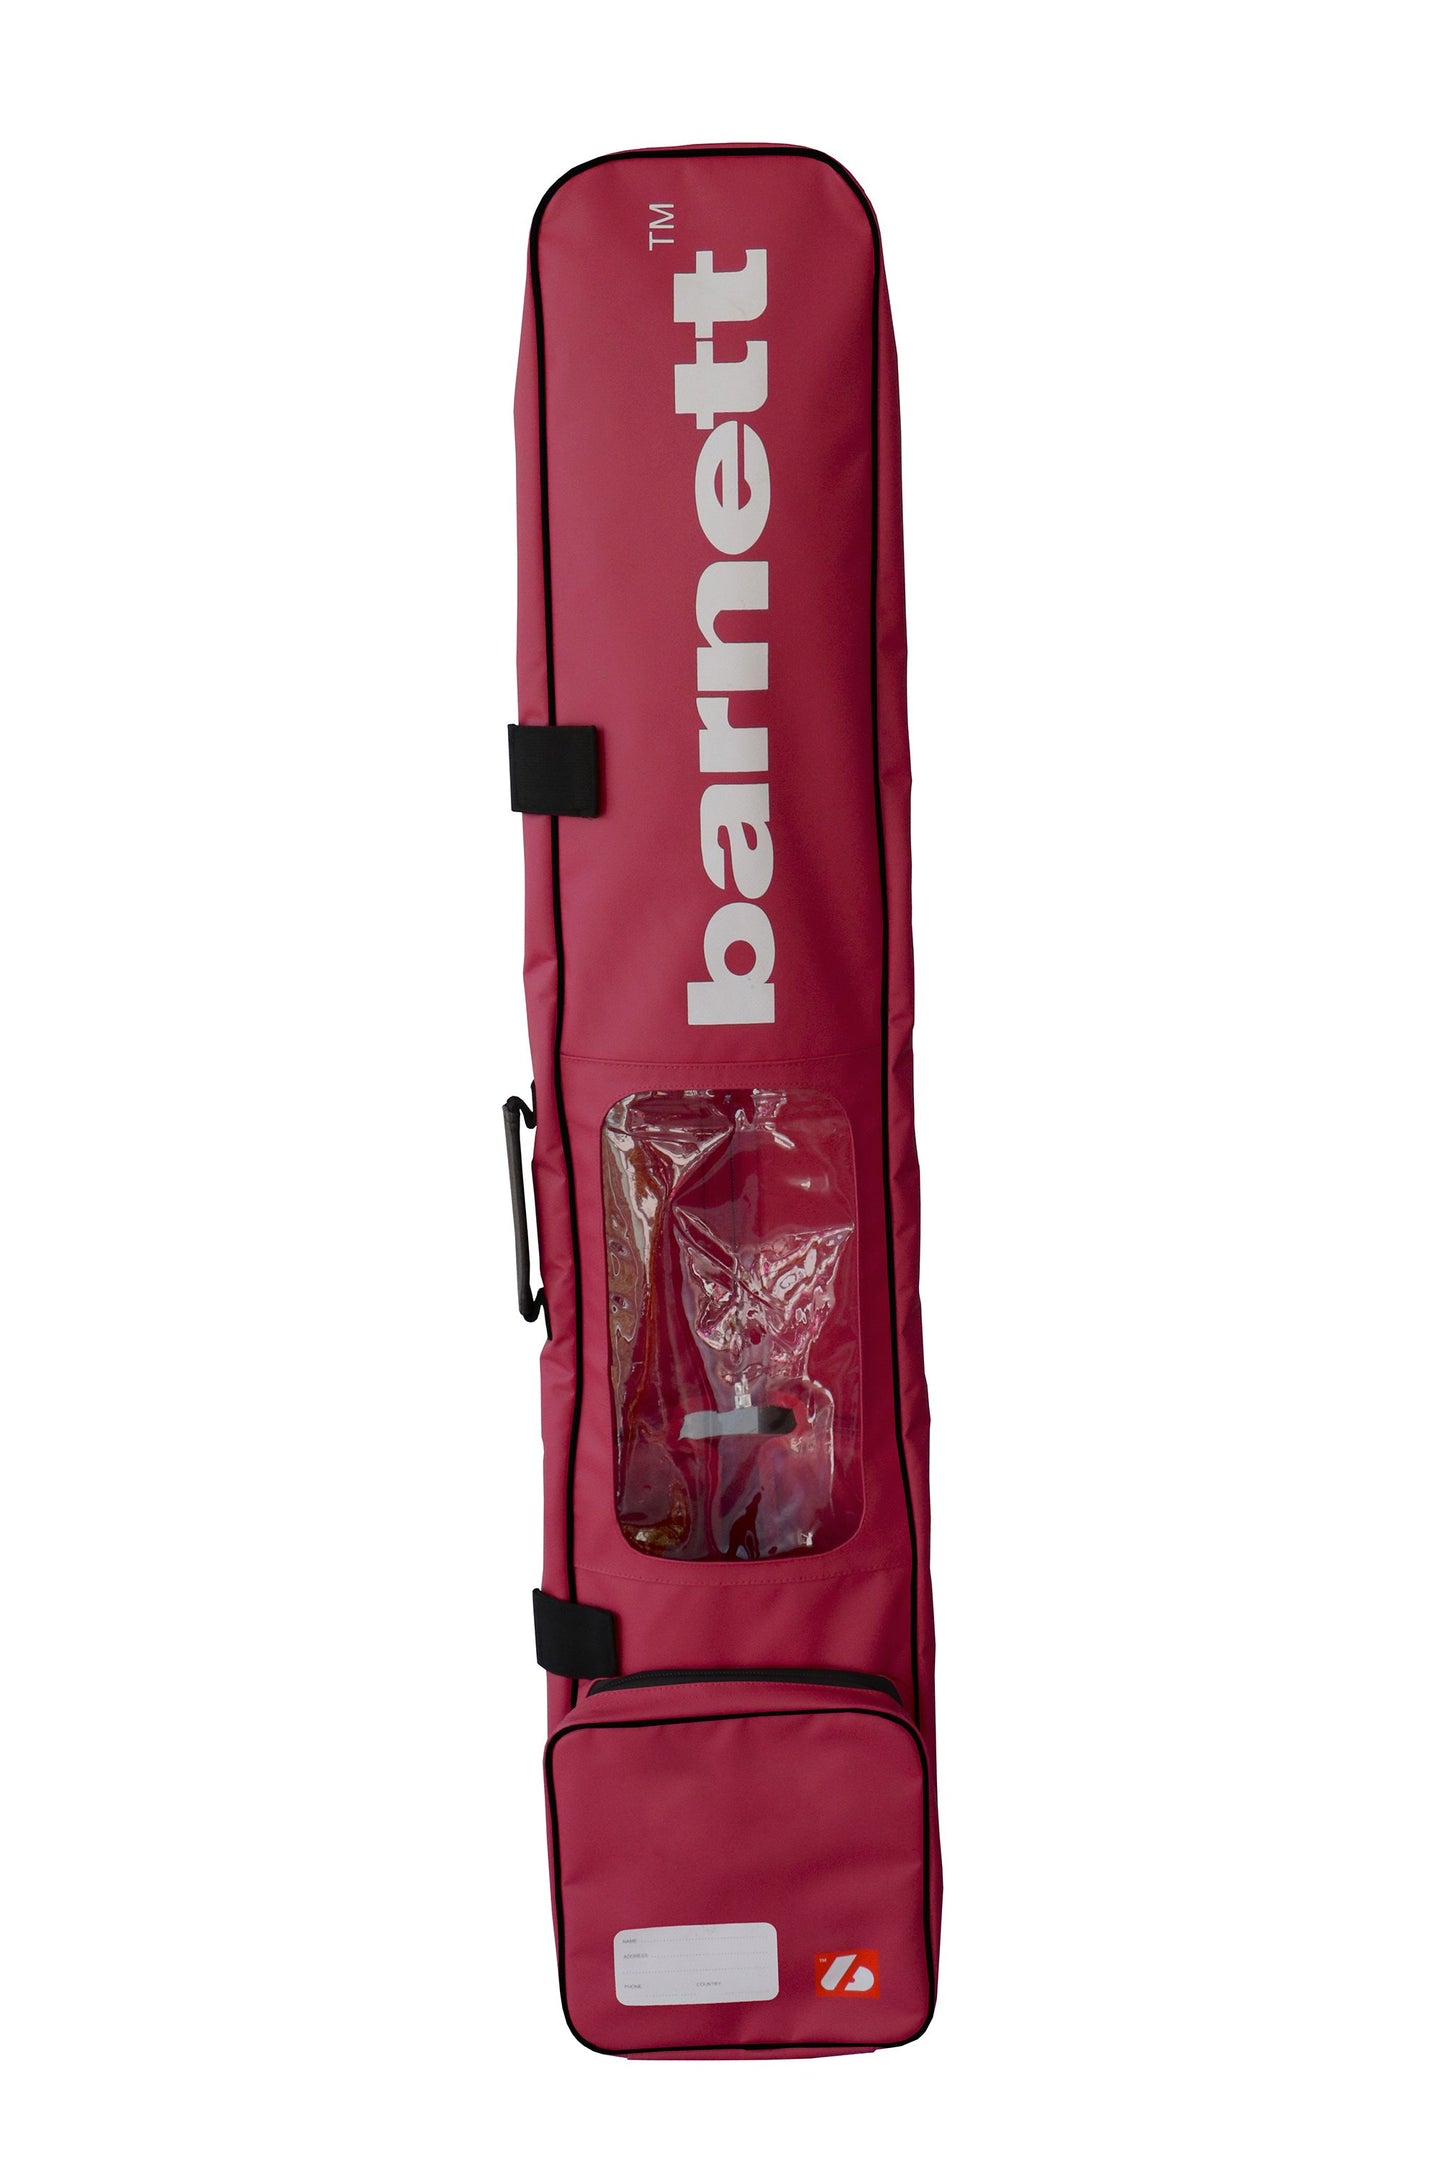 SMS-05 Biatlonová taška, vel. senior